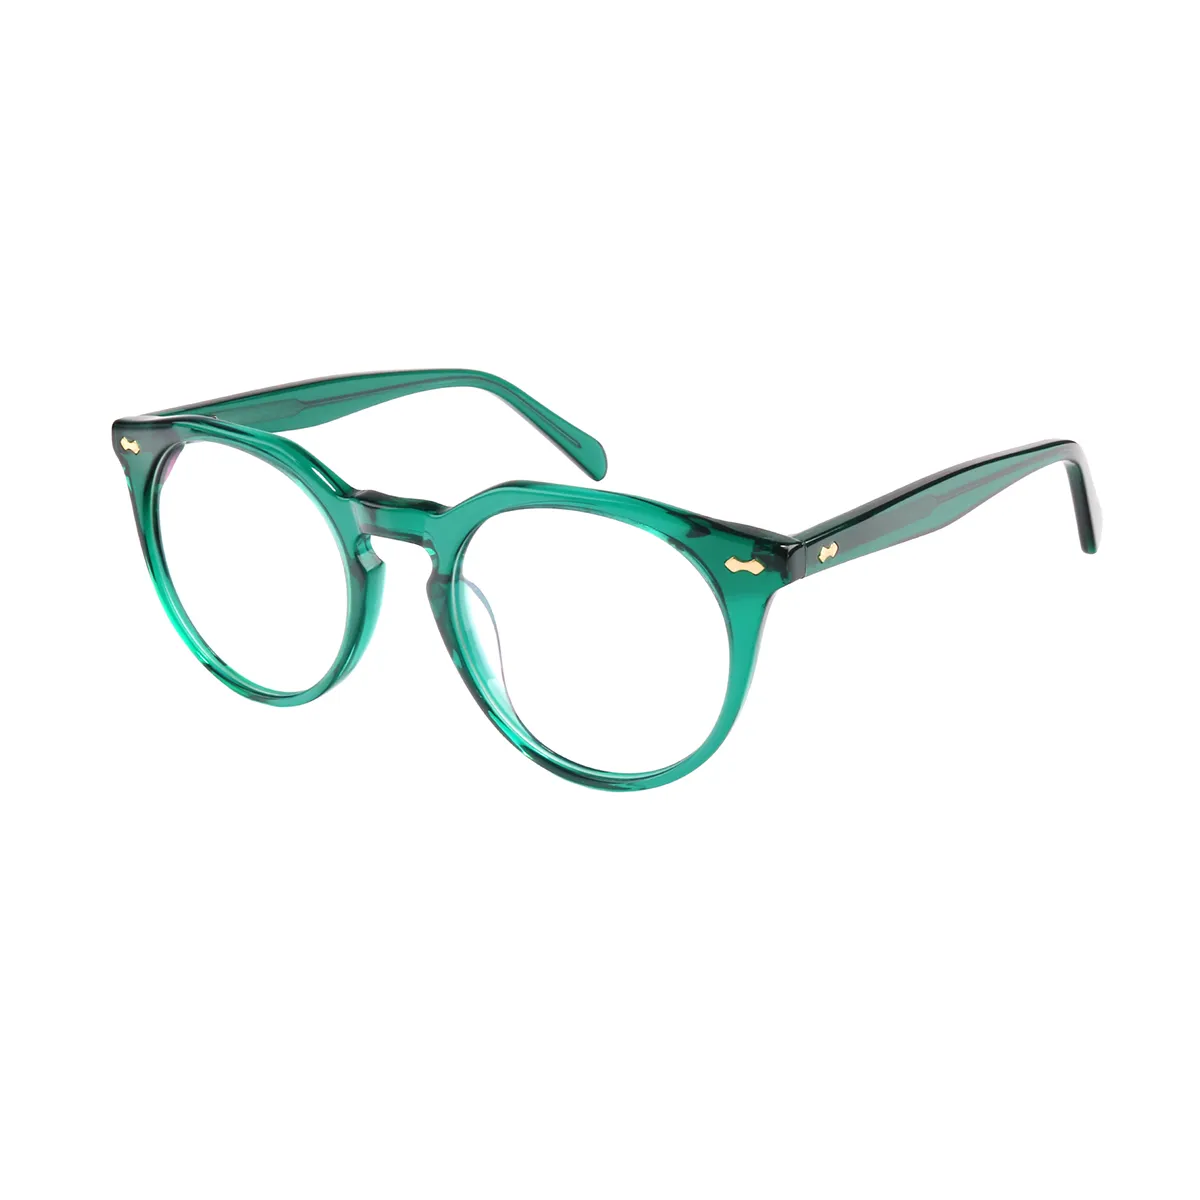 Darcy - Round Green Glasses for Men & Women - EFE